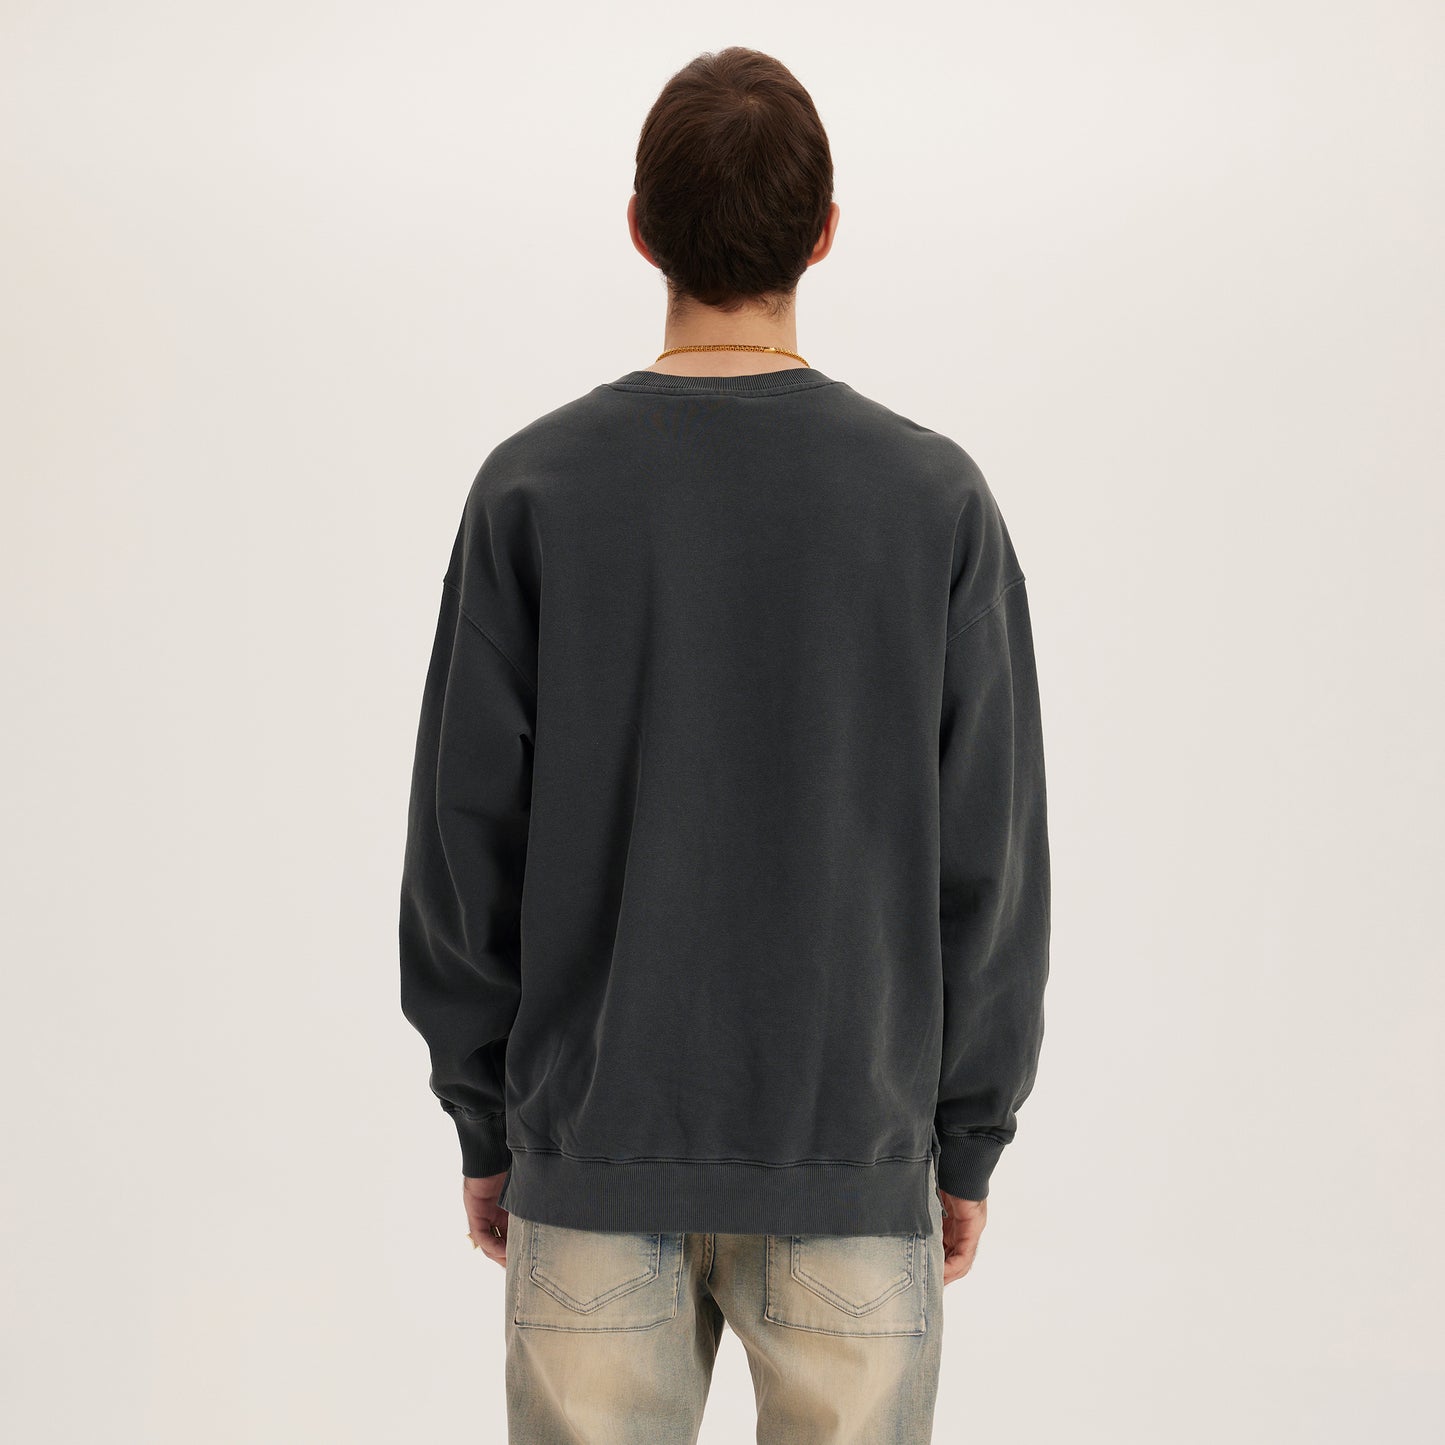 Bird Machine Merch - Unisex Oversized Faded Sweatshirt (Eclipse Gray)